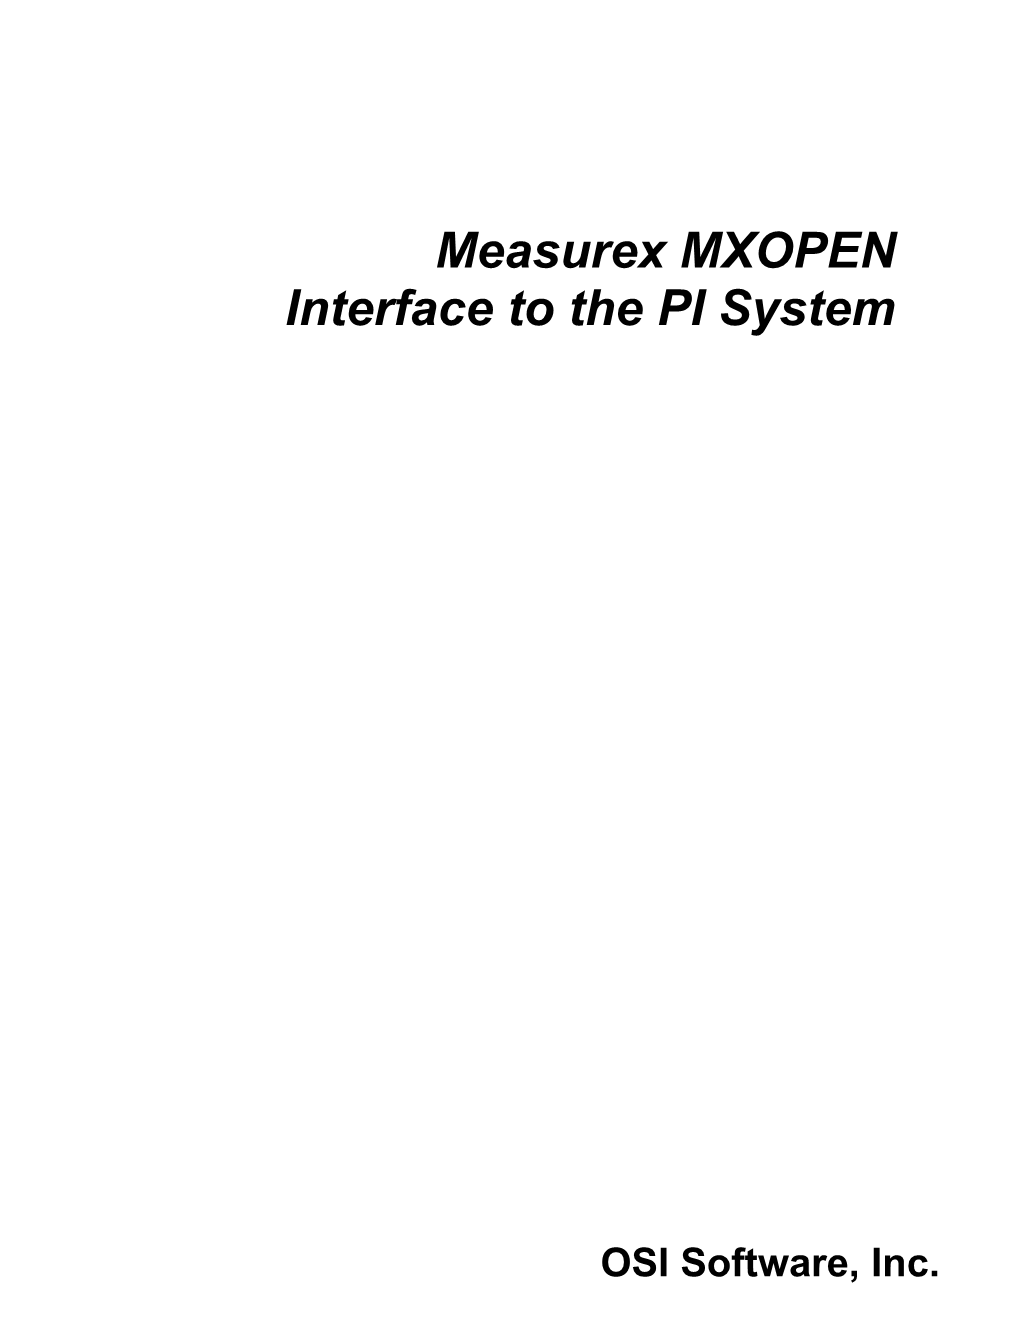 Measurex MXOPEN Interface to the PI System